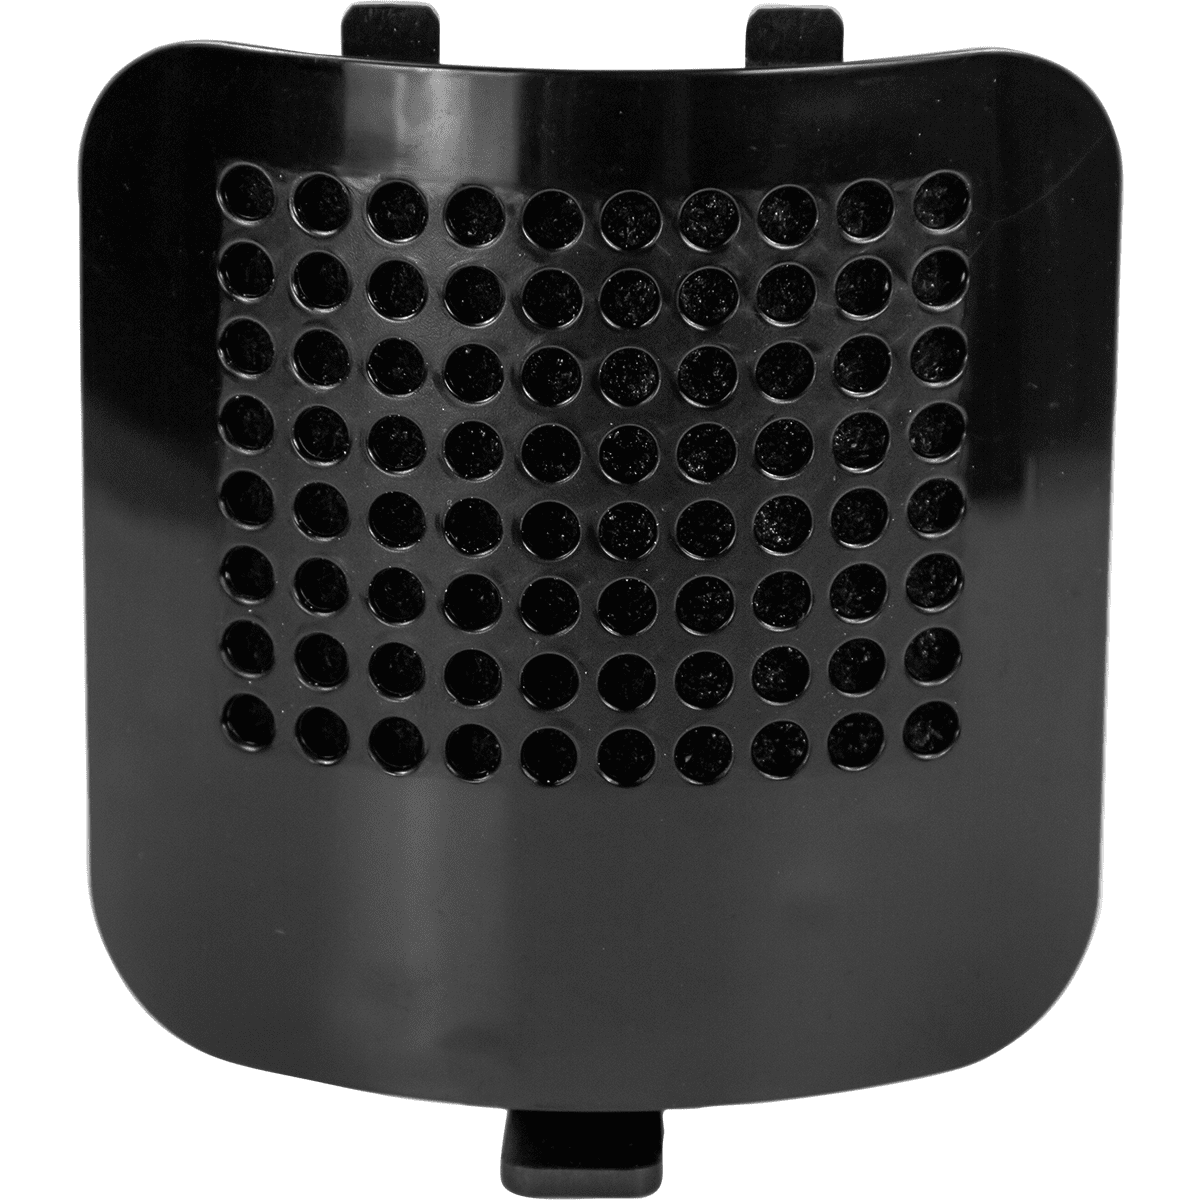 EyeVac Home Exhaust Filter - Black (EVHEF-B)